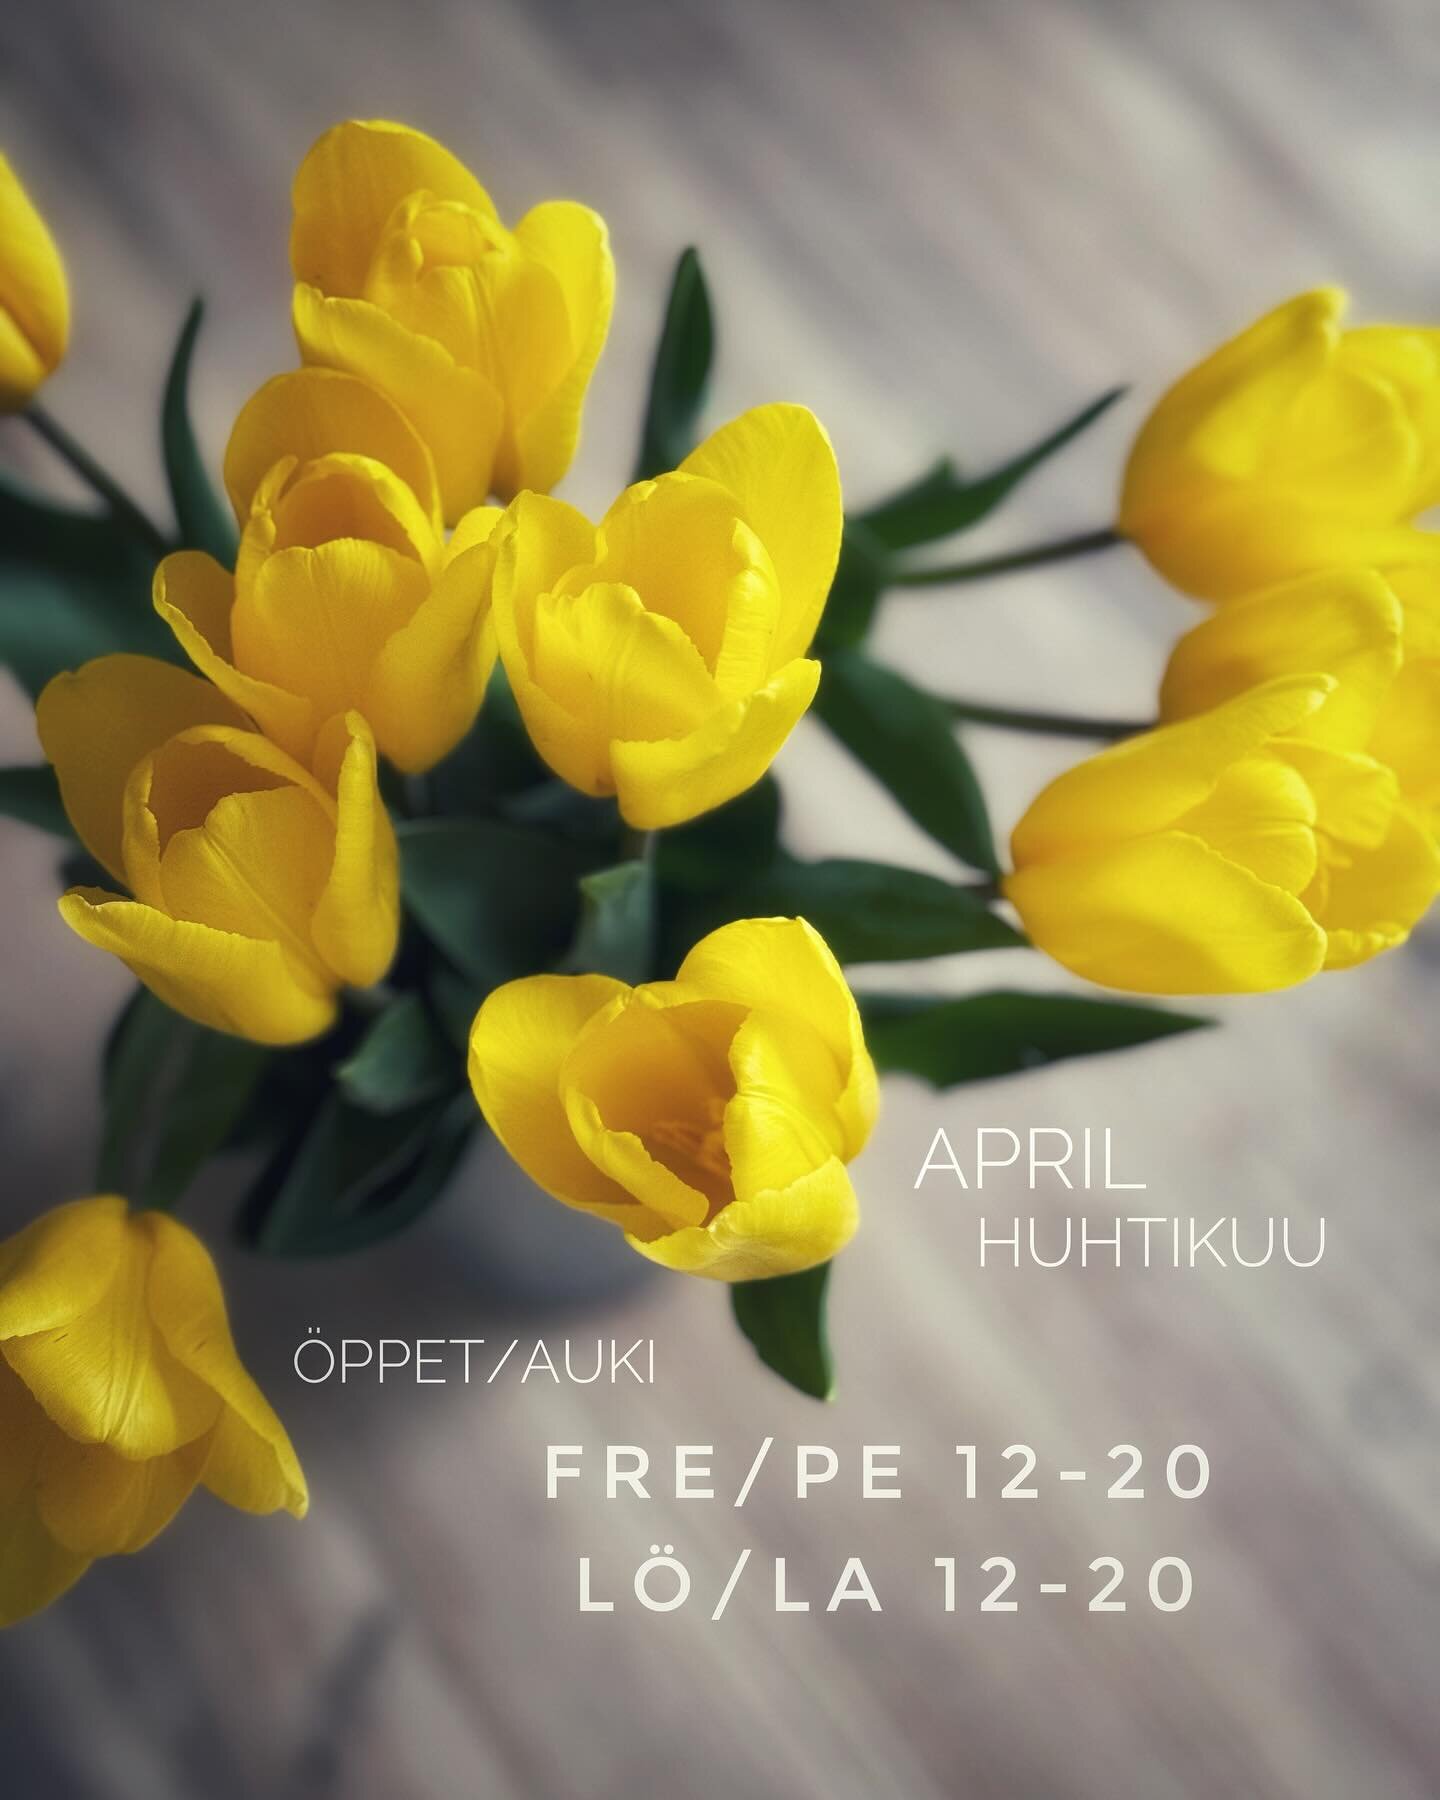 April/Huhtikuu
&Ouml;ppet/auki:
fre/pe 12-20
l&ouml;/la 12-20 
#cafegamlabanken #ini&ouml;